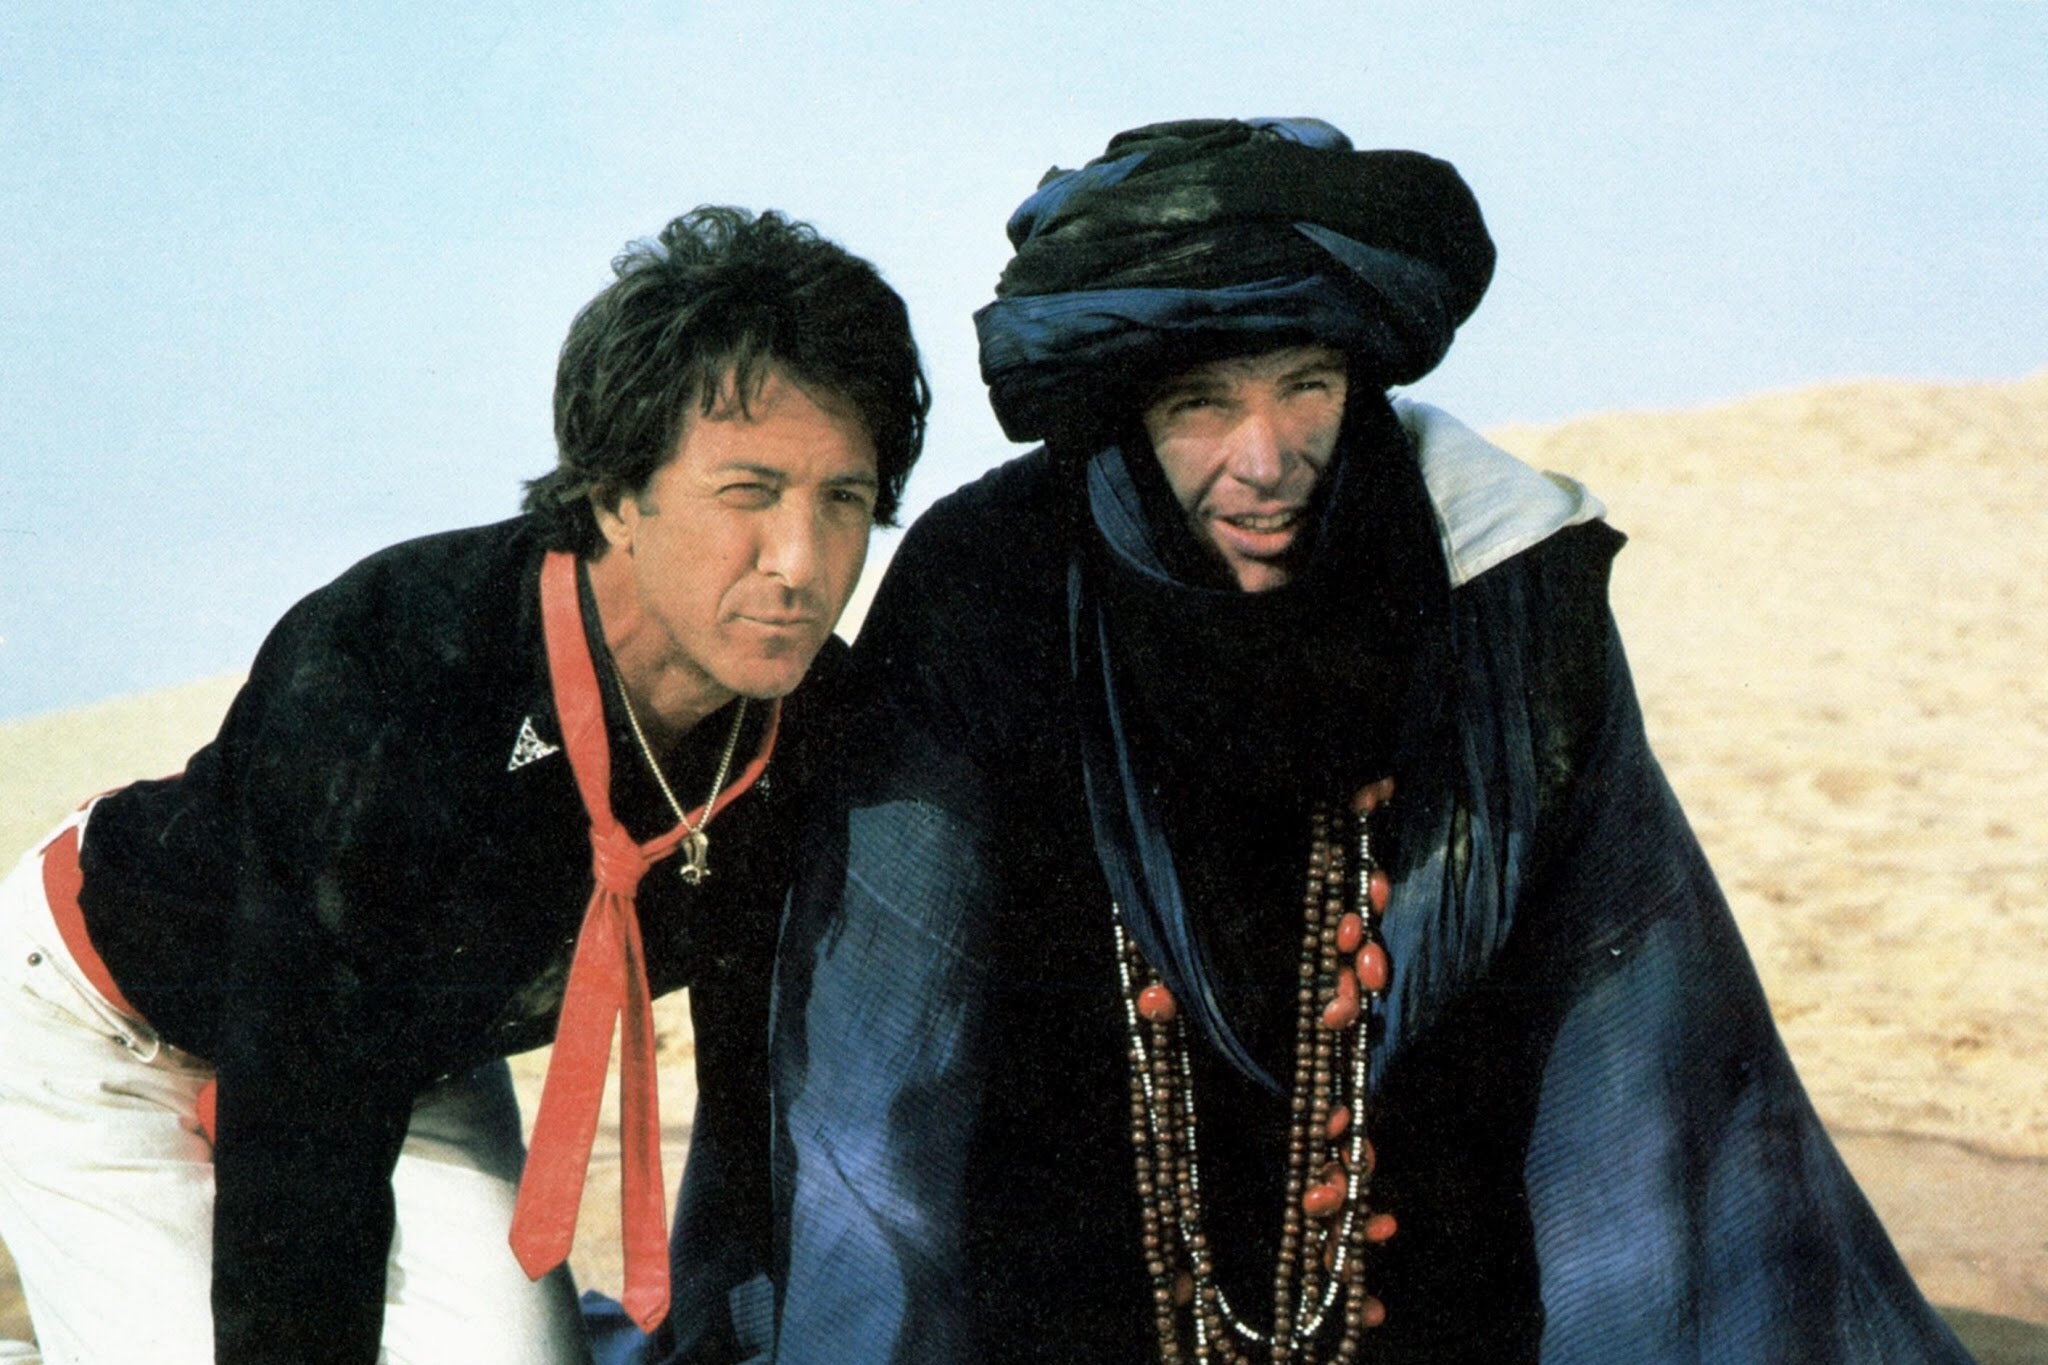 Dustin Hoffman and Warren Beatty kneeling on sand in the desert.